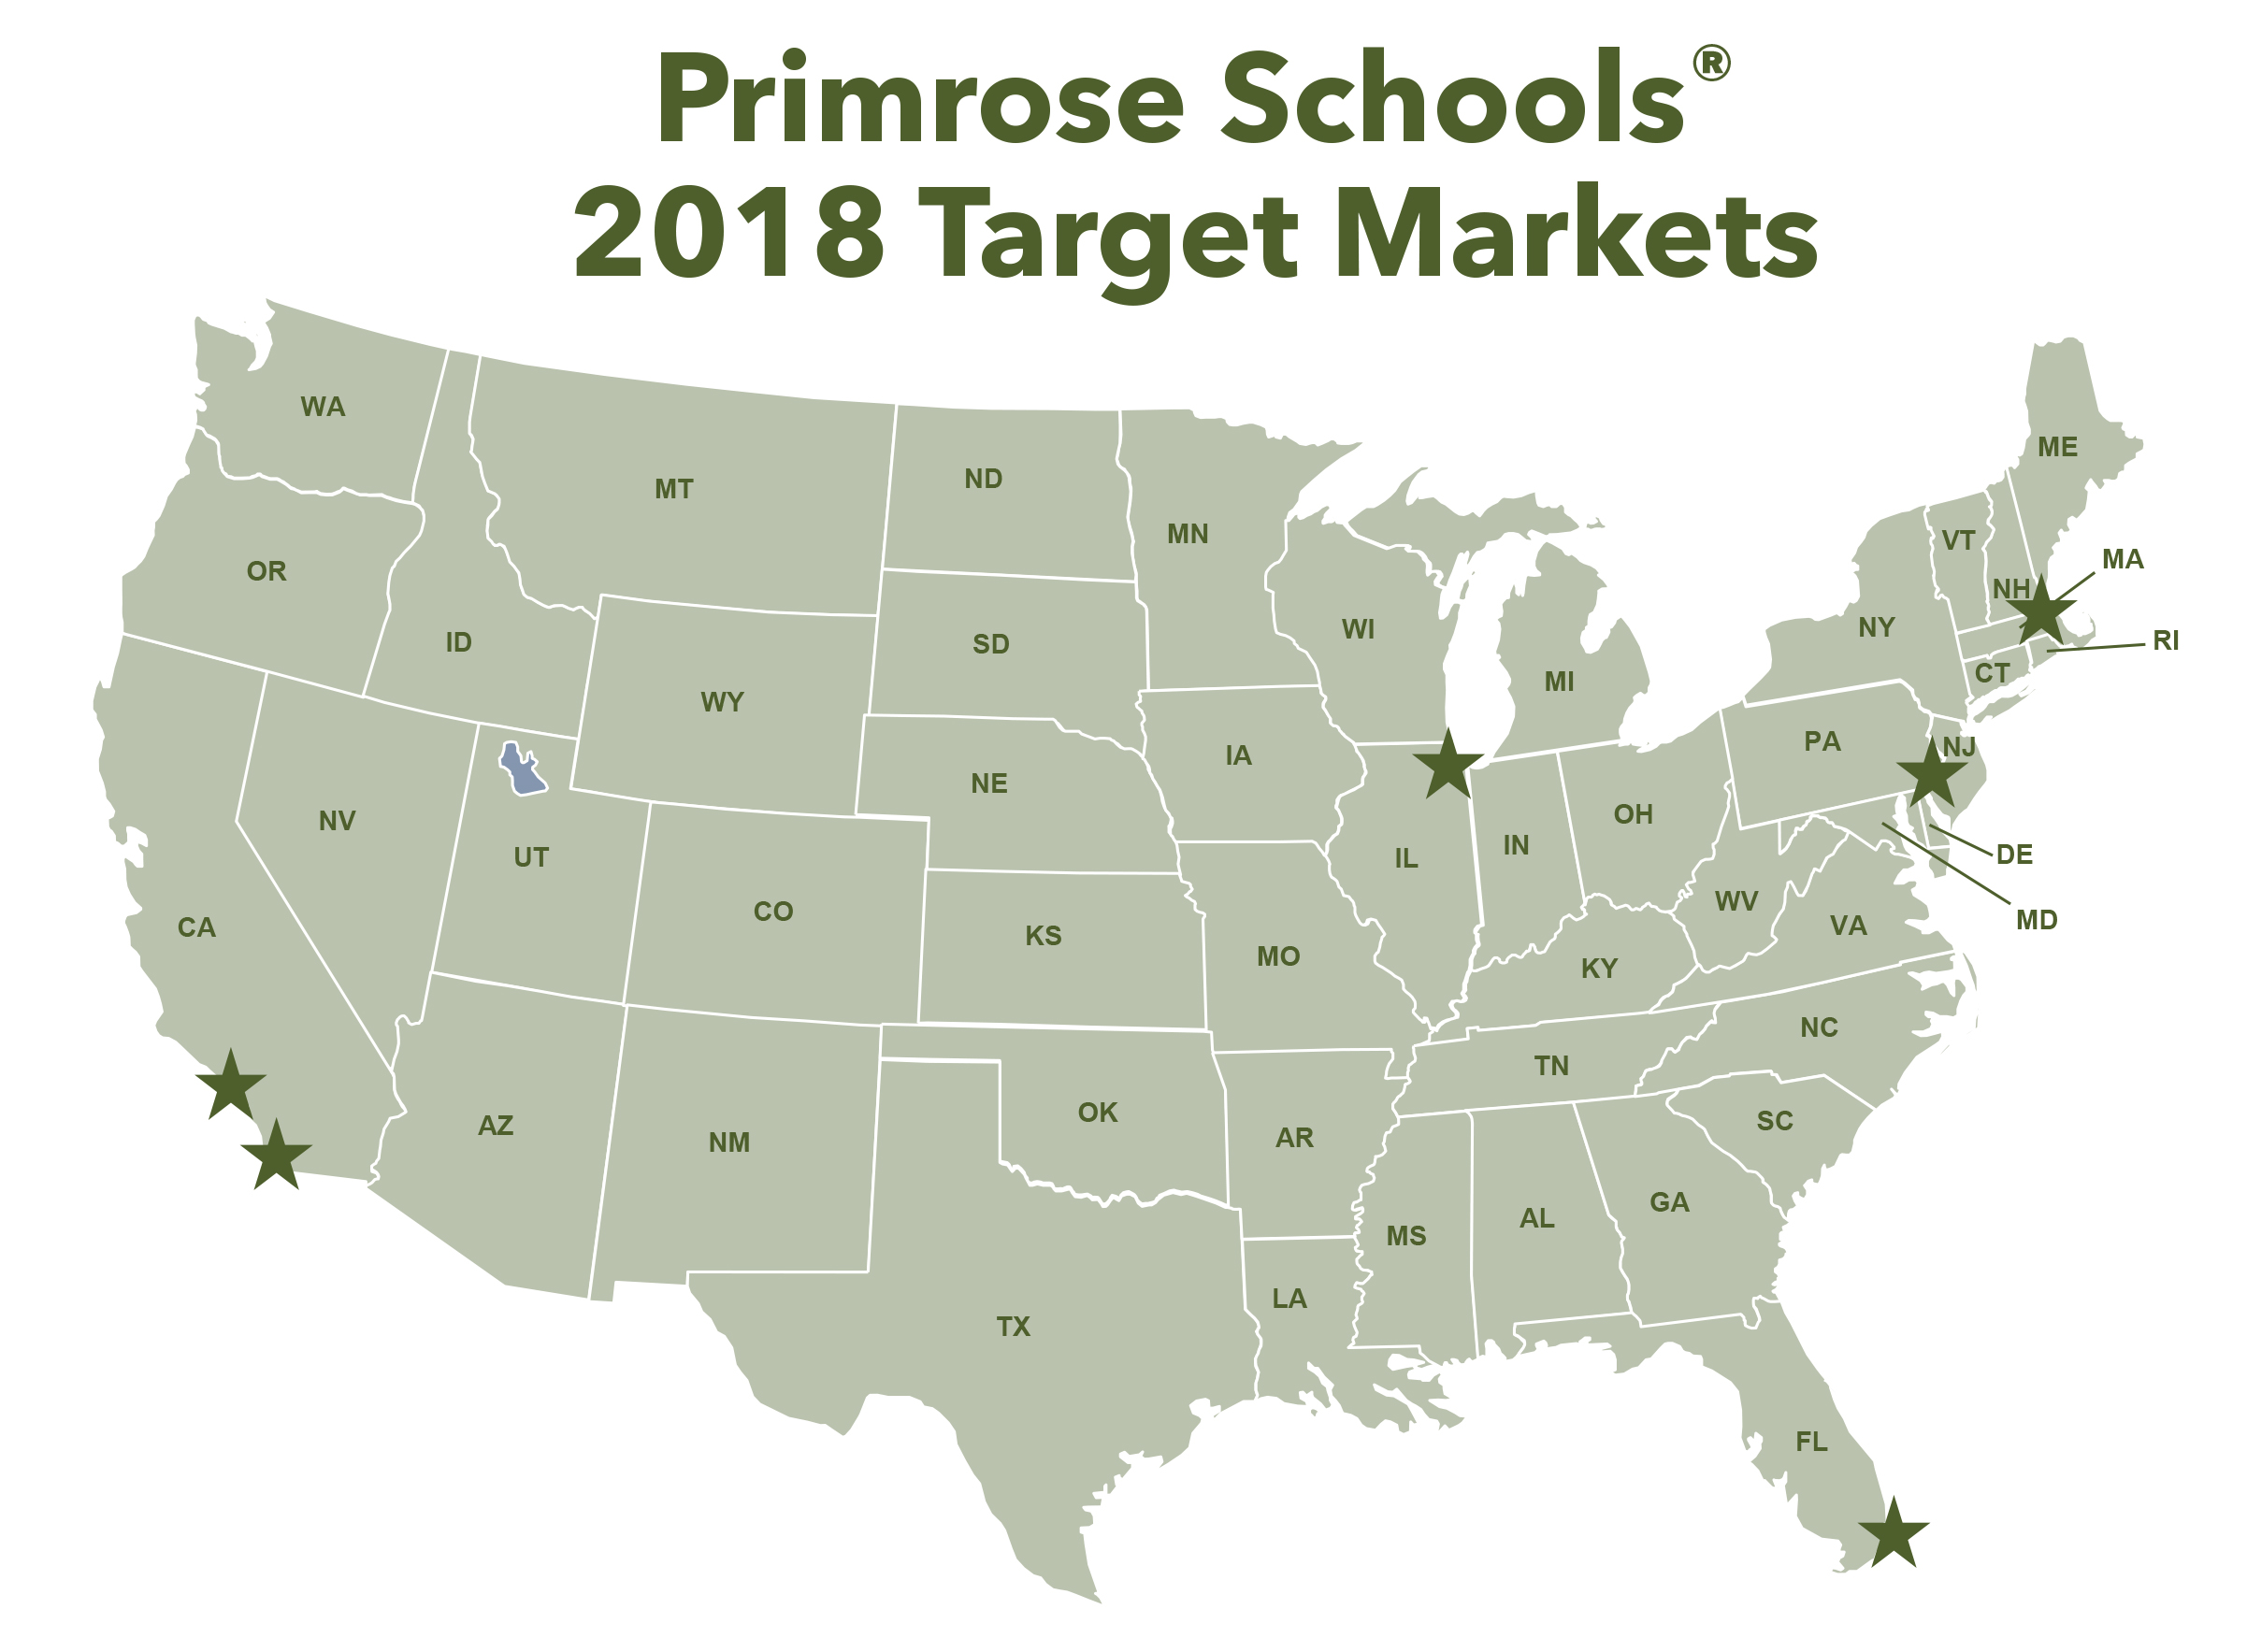 Primrose Schools has identified six target markets for immediate growth in 2018.